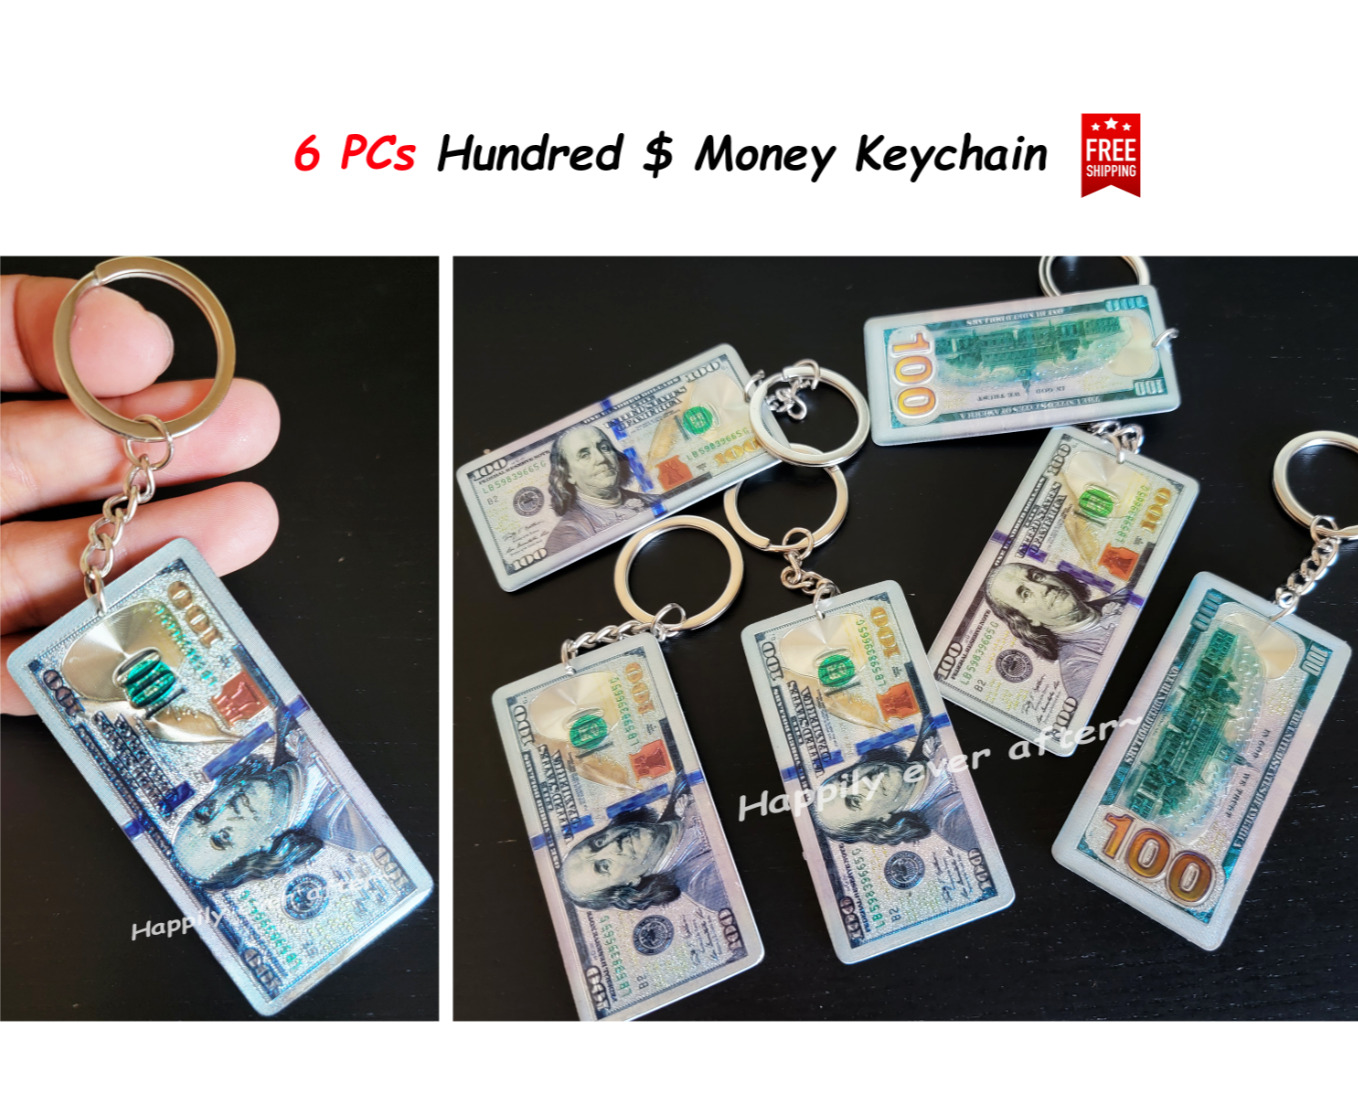 6 PCs Money Keychain/ Hundred Dollar Keychain/ Lucky Money Keychain *US SELLER*